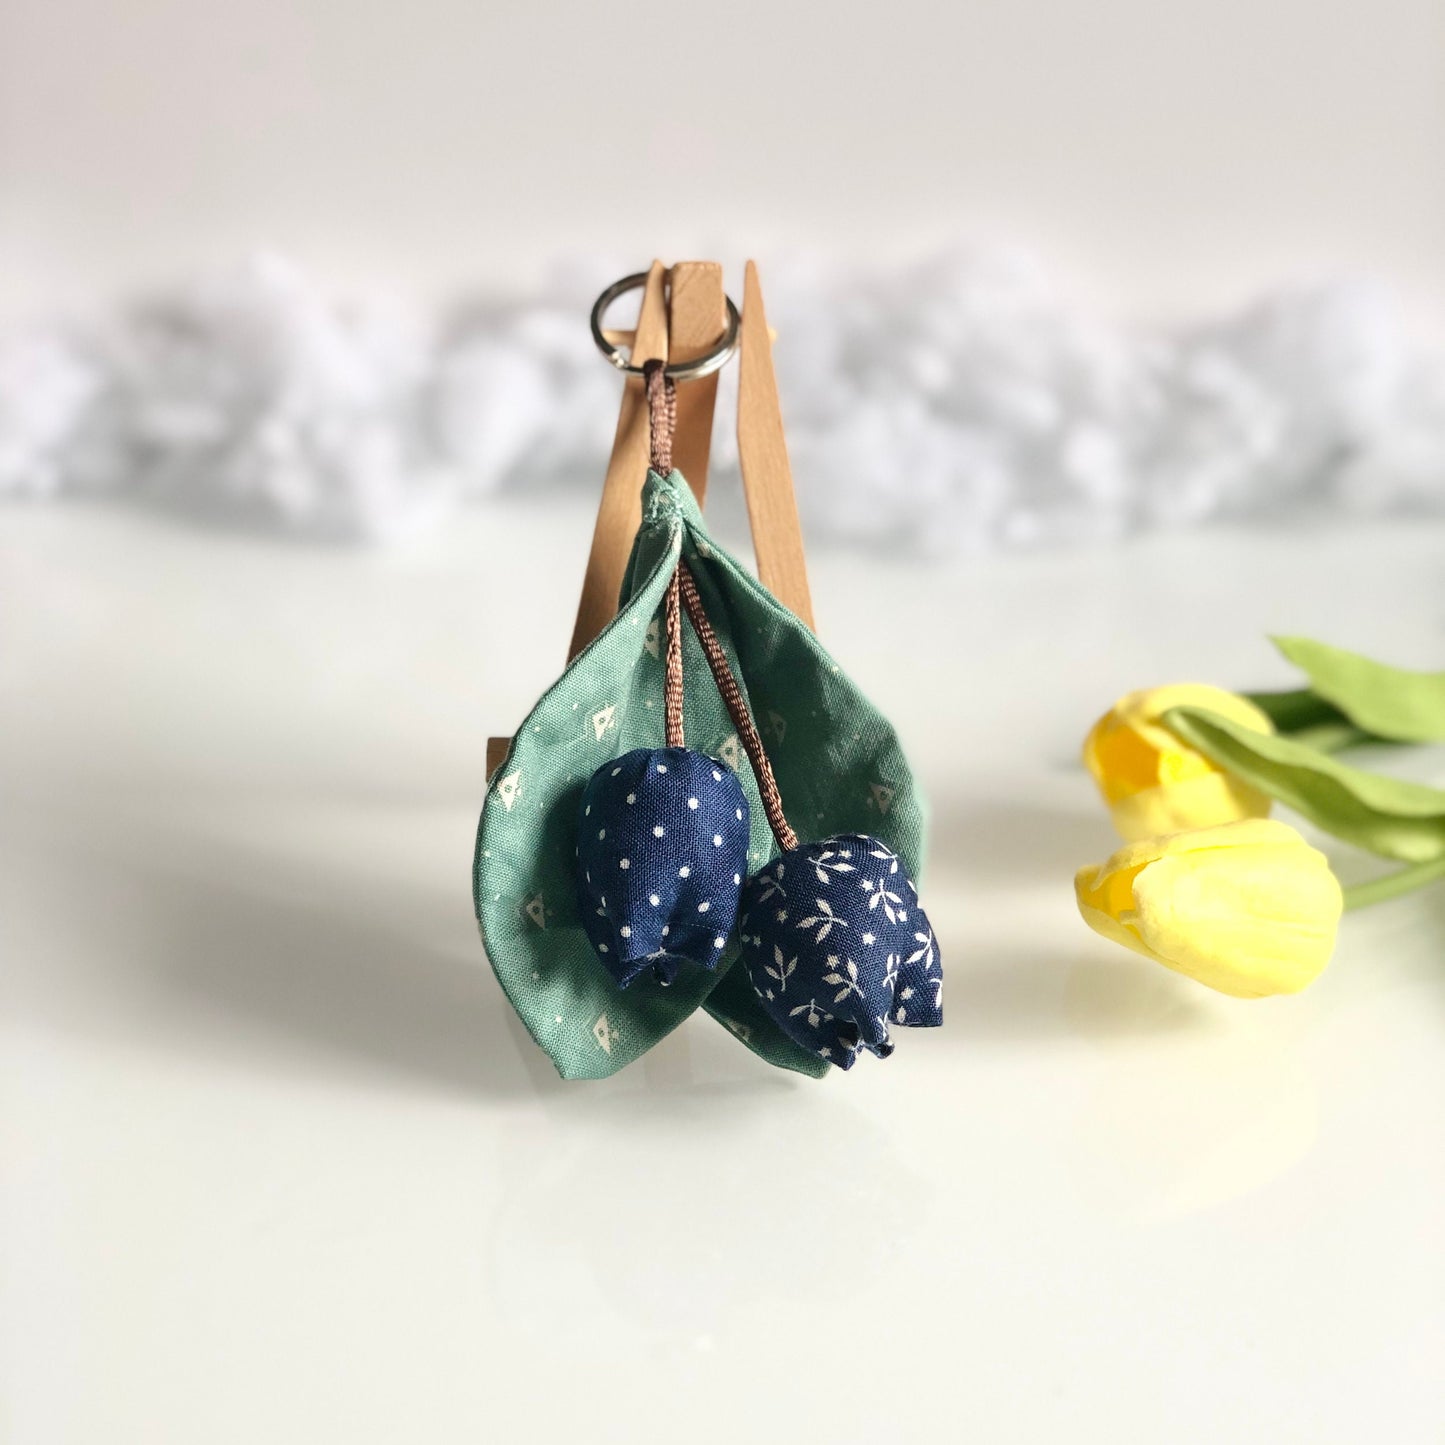 Handmade Tulip Keychain, Fabric Keychain, Keychain For Women, Gift For Her, RANDOM ONLY